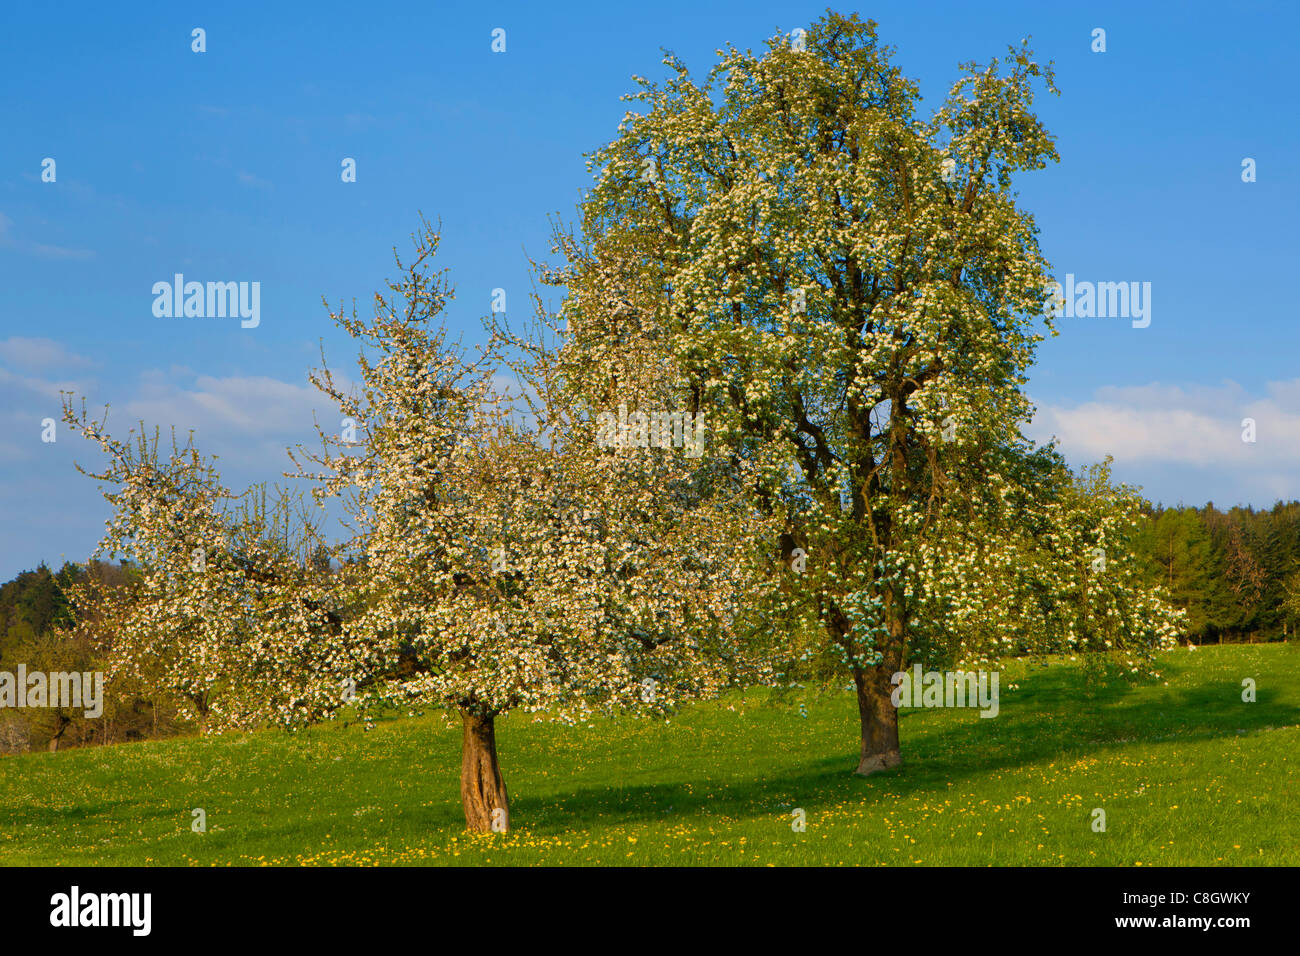 Switzerland apple trees fruit trees -Fotos und -Bildmaterial in hoher  Auflösung – Alamy